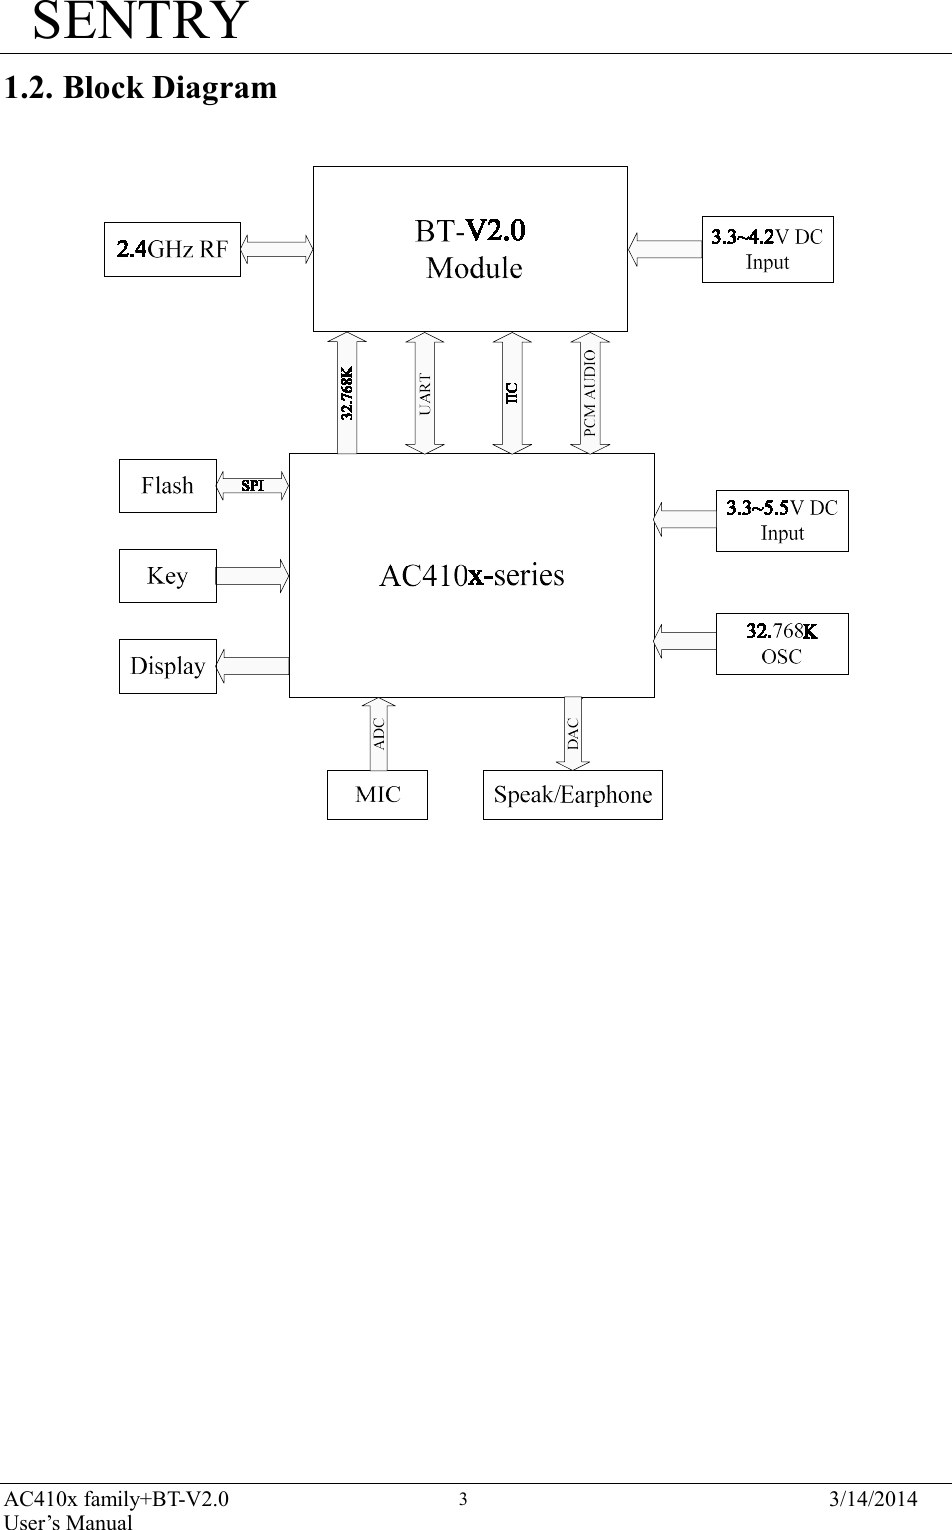 SENTRY AC410x family+BT-V2.0 User’s Manual 3/14/2014 3                                     1.2. Block Diagram                  